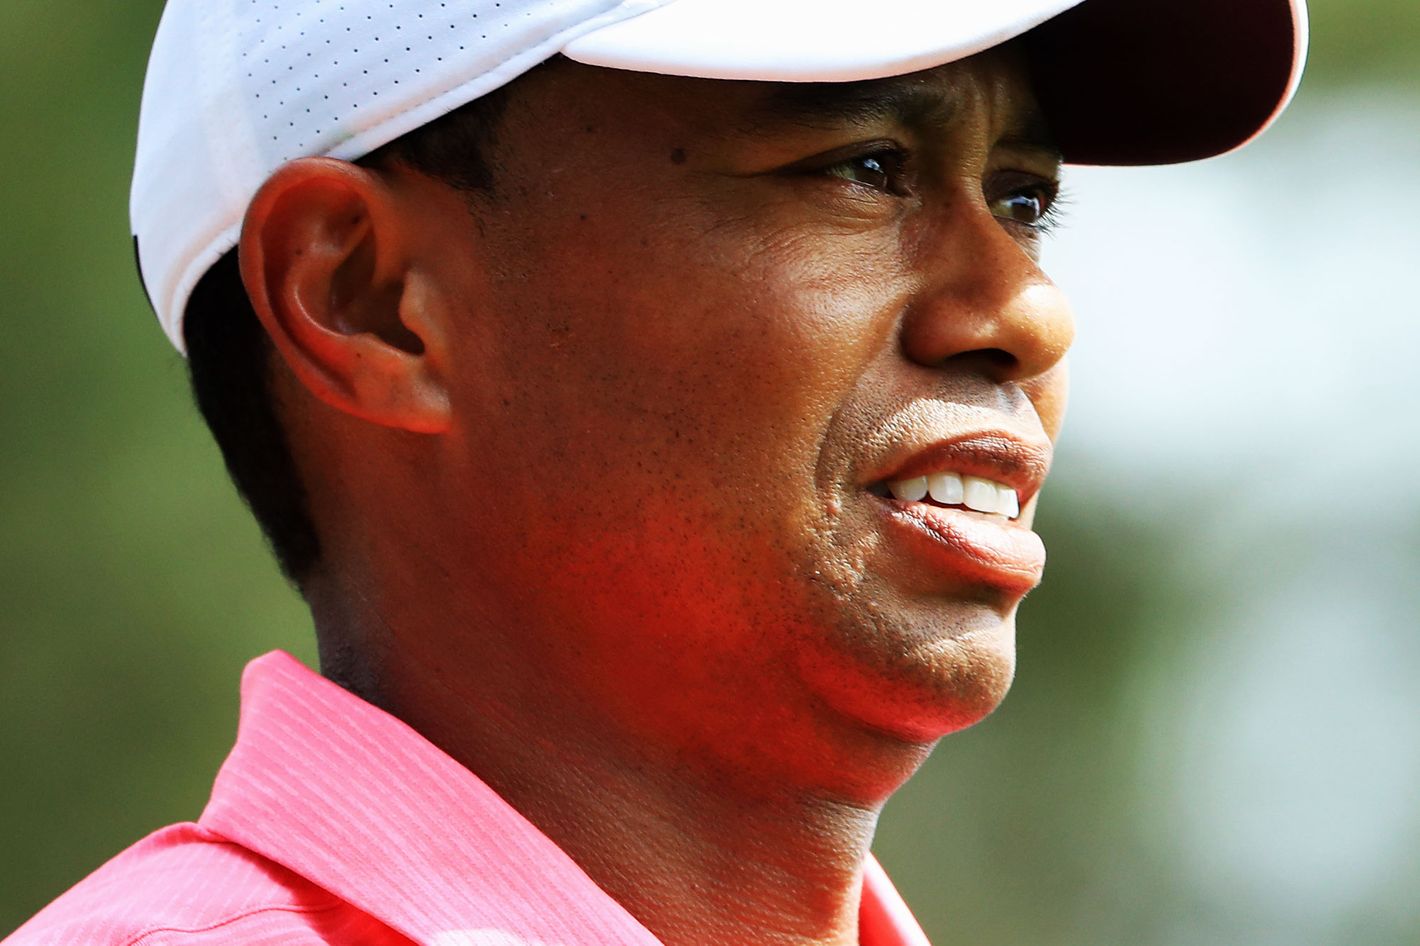 Tiger Woodss Ex-Girlfriend Wants to Break Her NDA Report